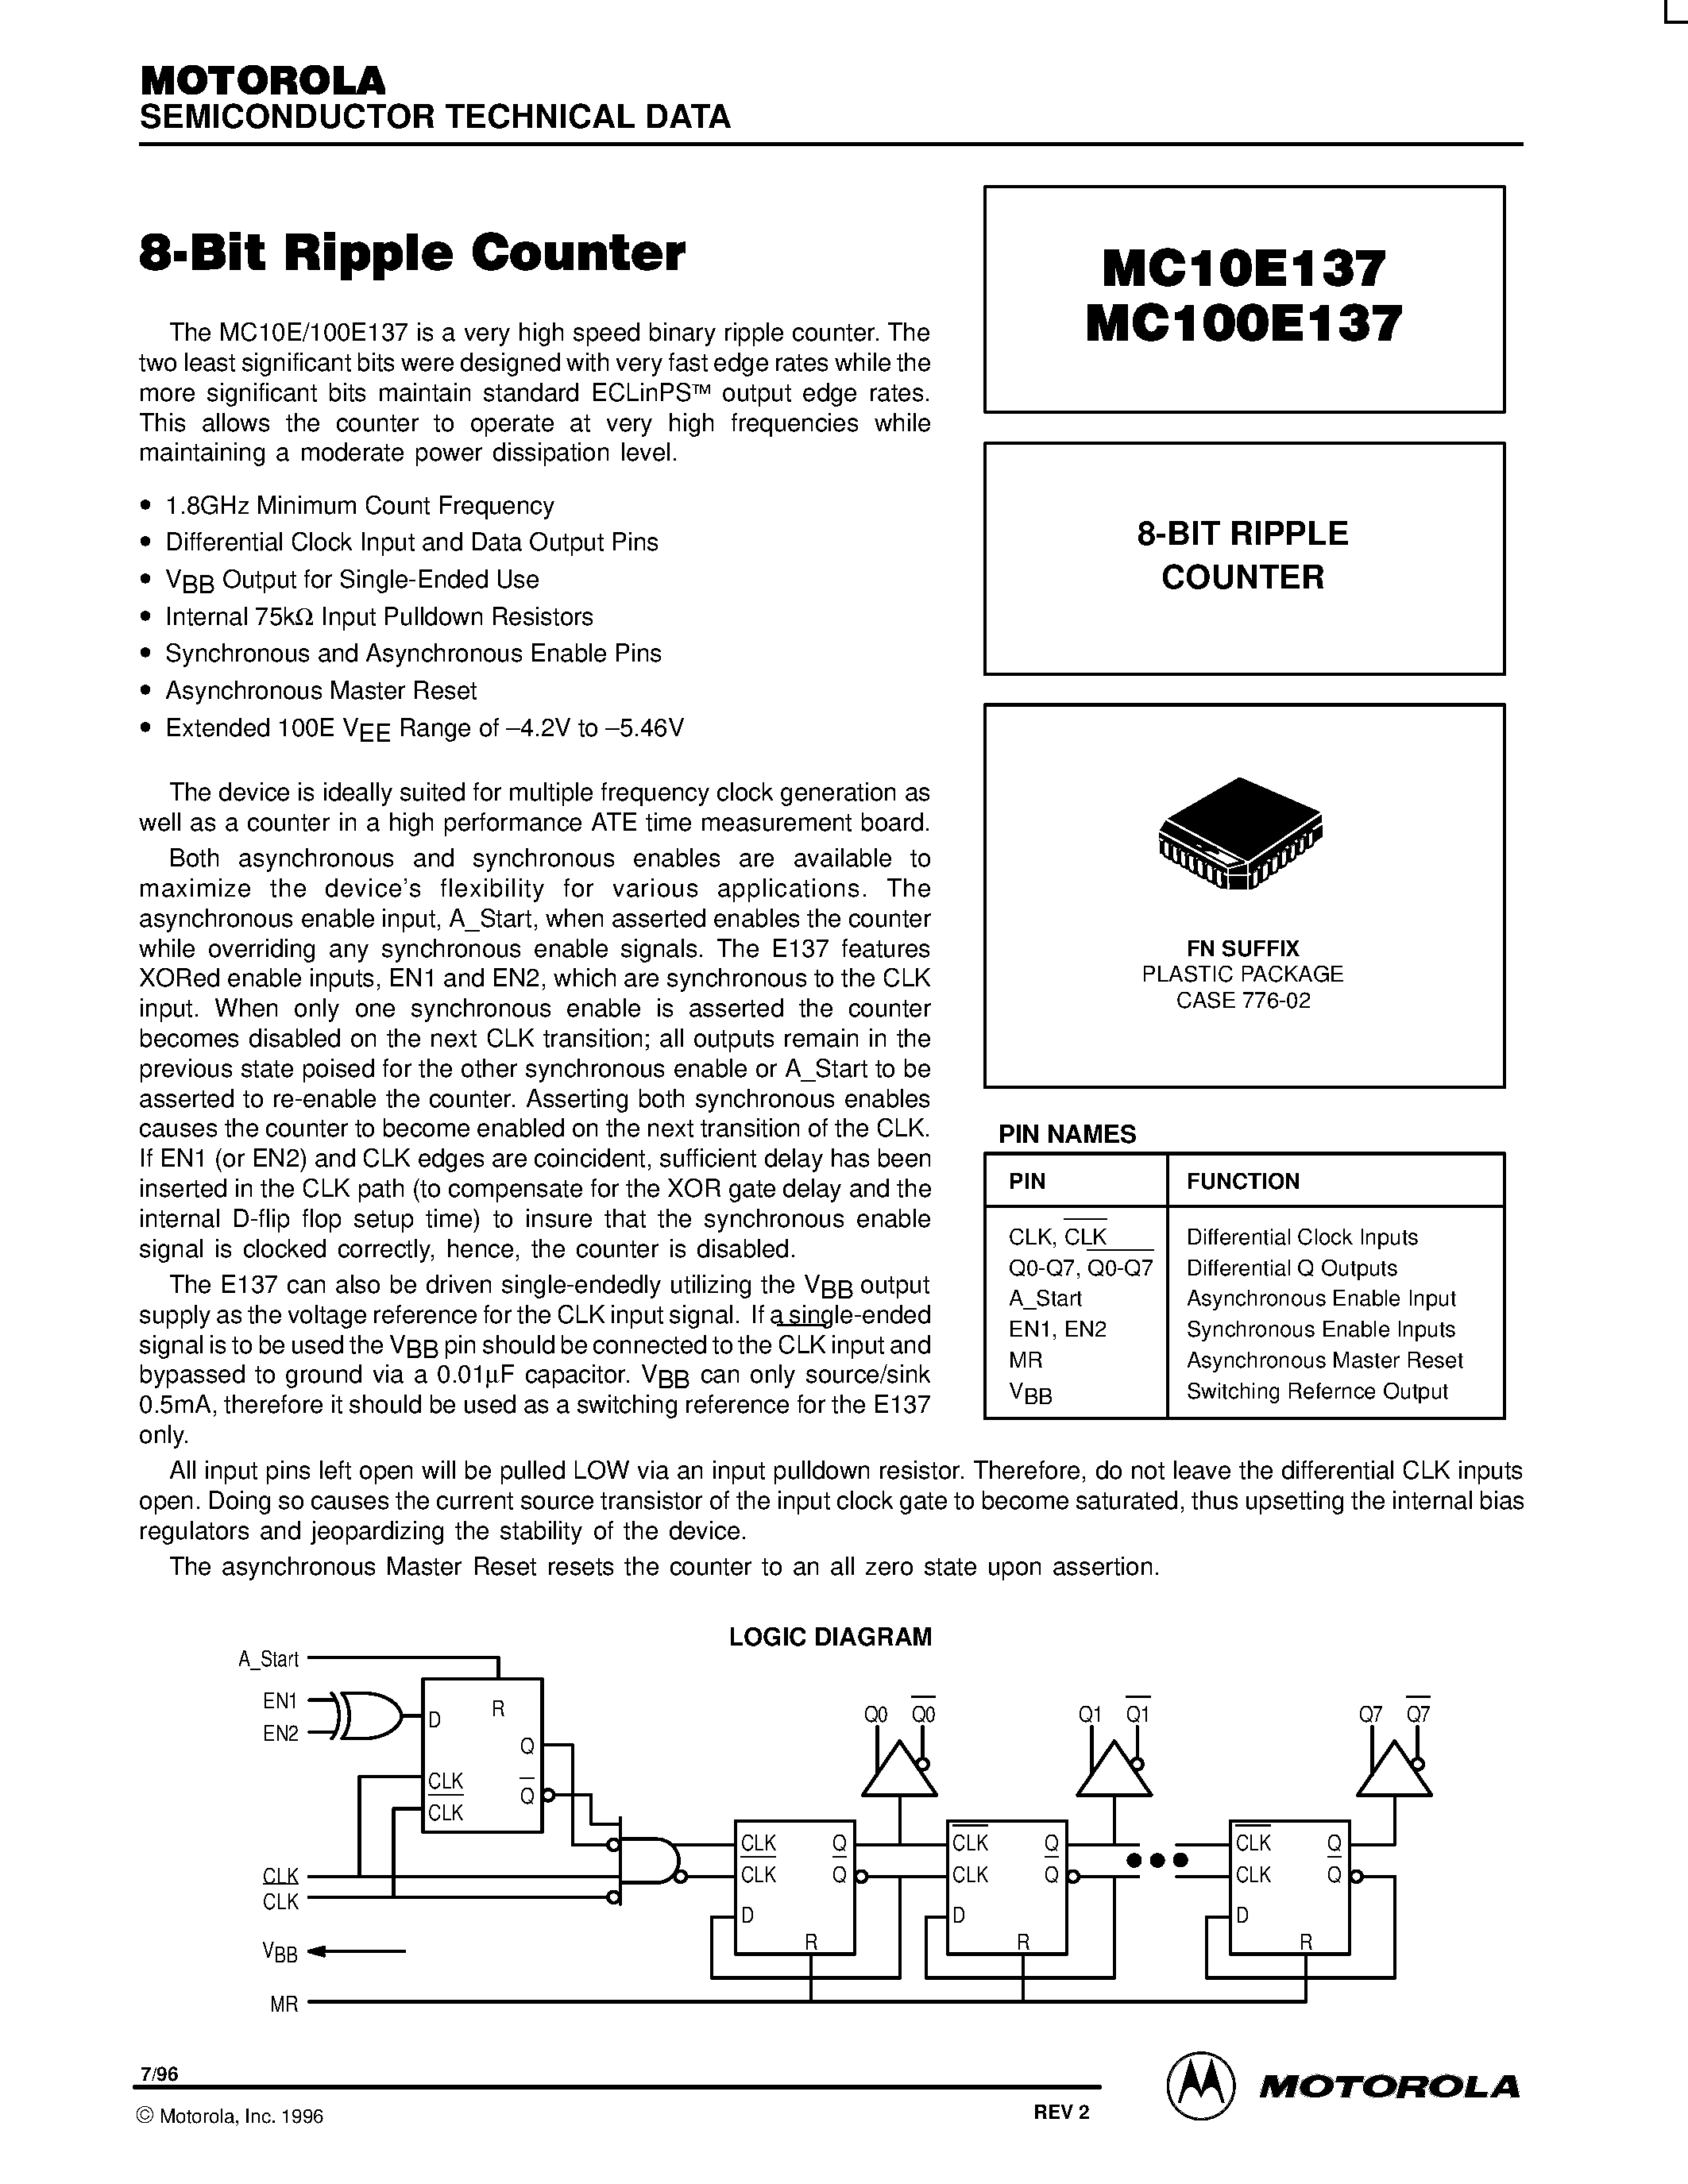 Datasheet MC100E137FN - 8-BIT RIPPLE COUNTER page 1